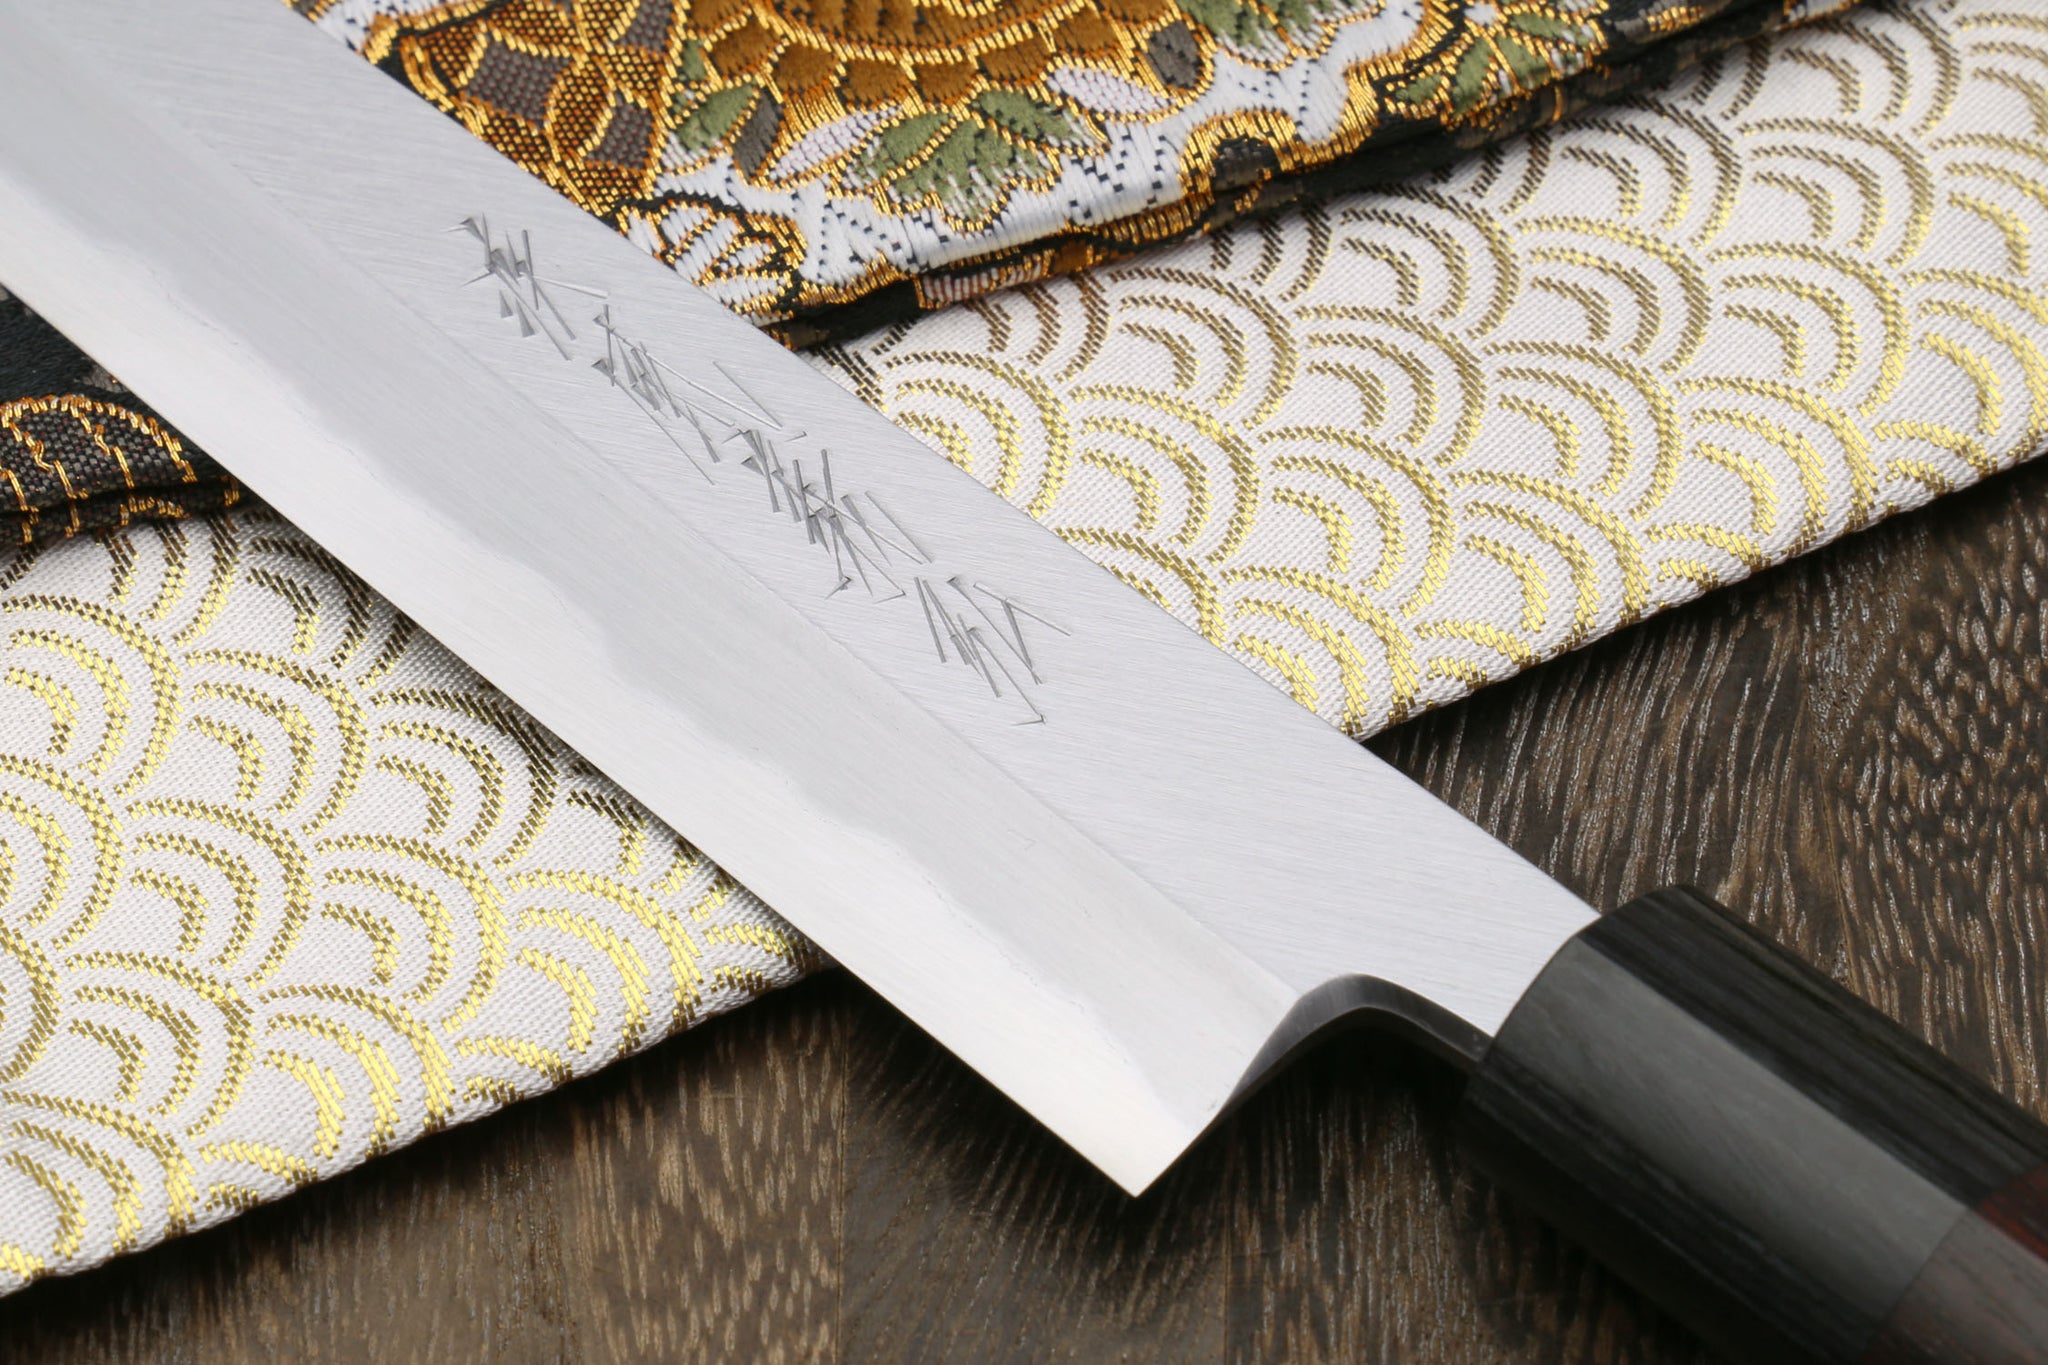 Left Handed] Fusachika 1st Grade, Yanagiba Sushi Knife, Steel